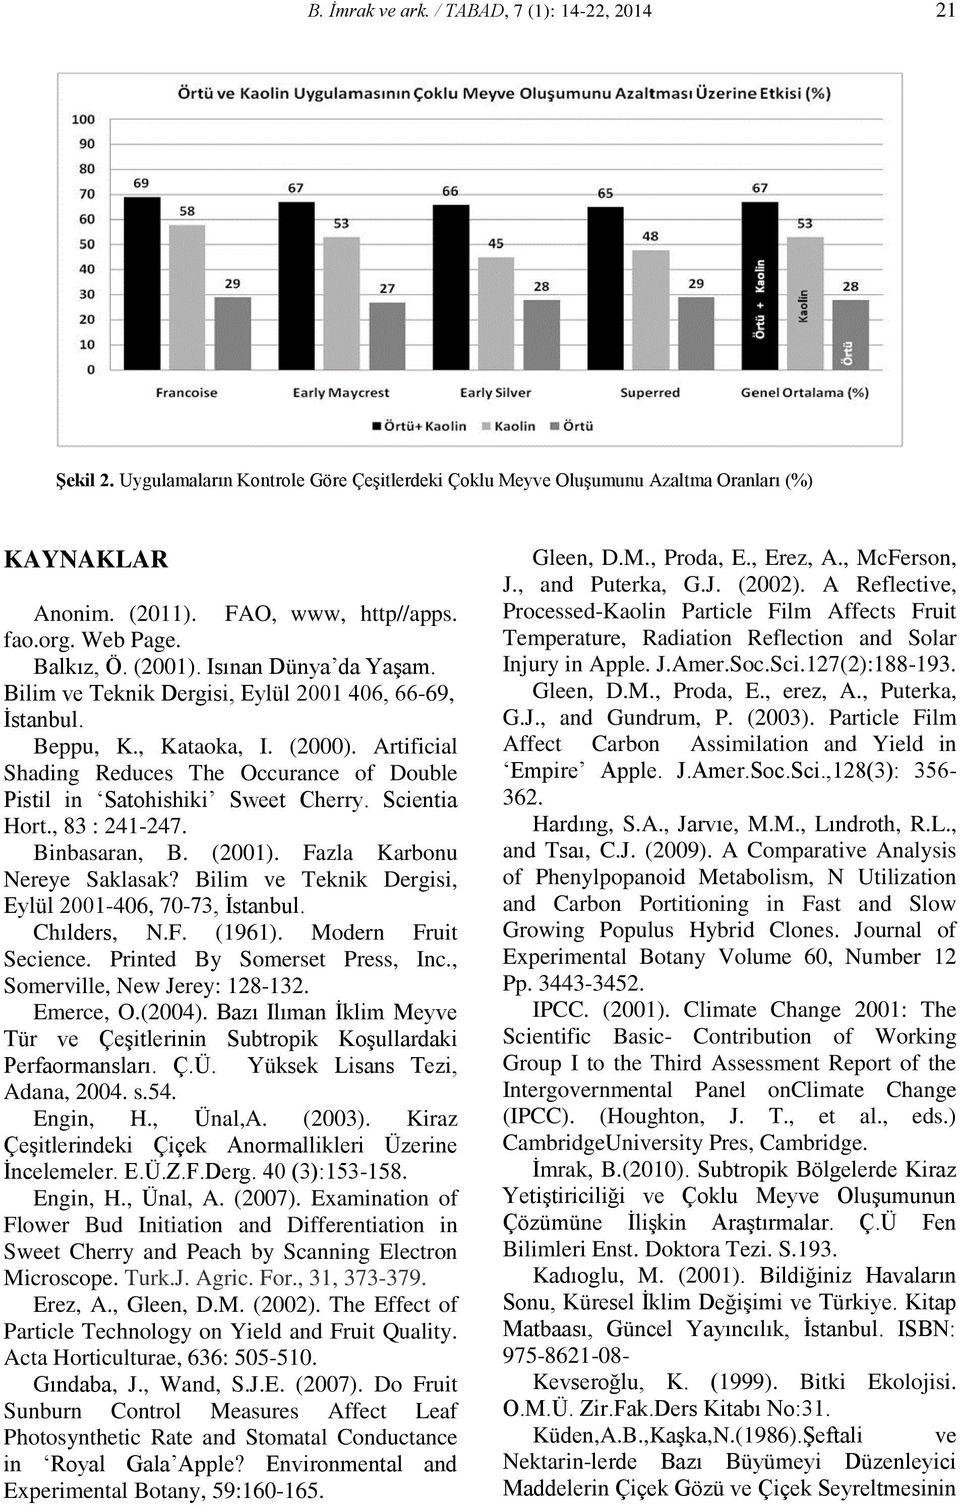 Artificial Shading Reduces The Occurance of Double Pistil in Satohishiki Sweet Cherry. Scientia Hort., 83 : 241-247. Binbasaran, B. (2001). Fazla Karbonu Nereye Saklasak?